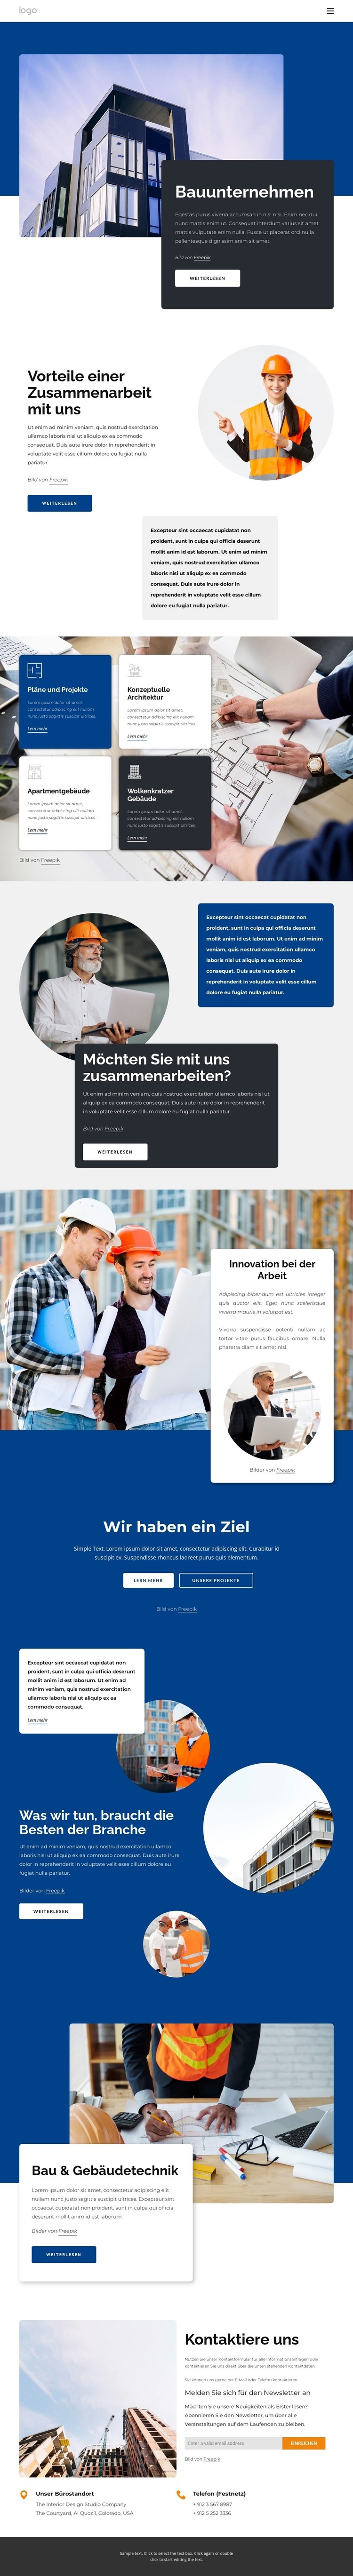 Bau co Website Builder-Vorlagen